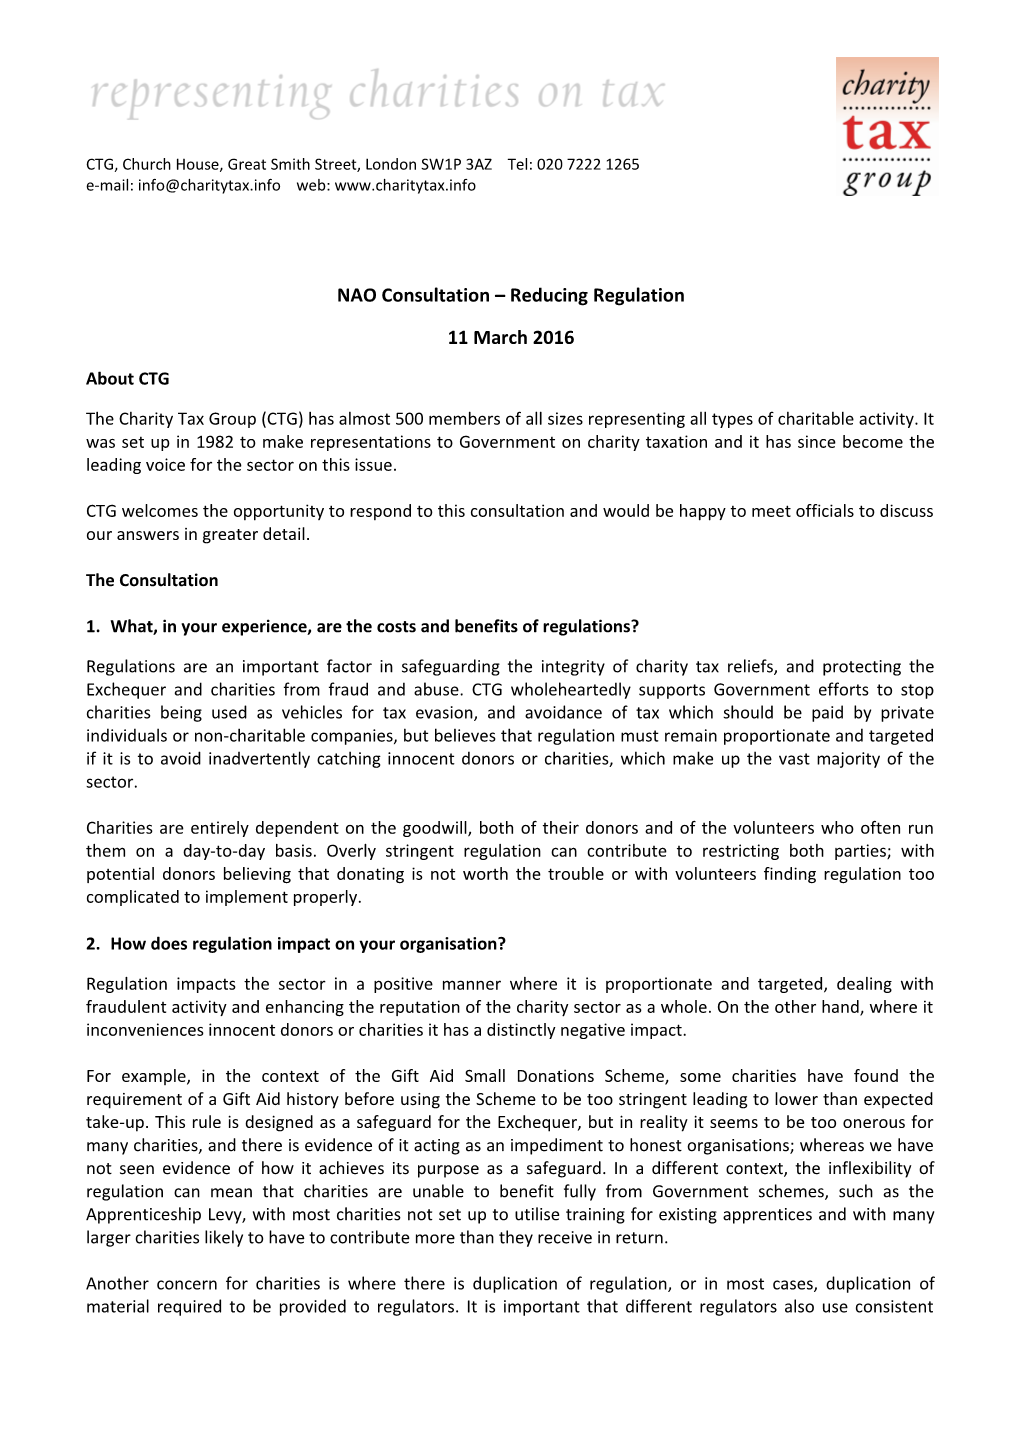 NAO Consultation Reducing Regulation